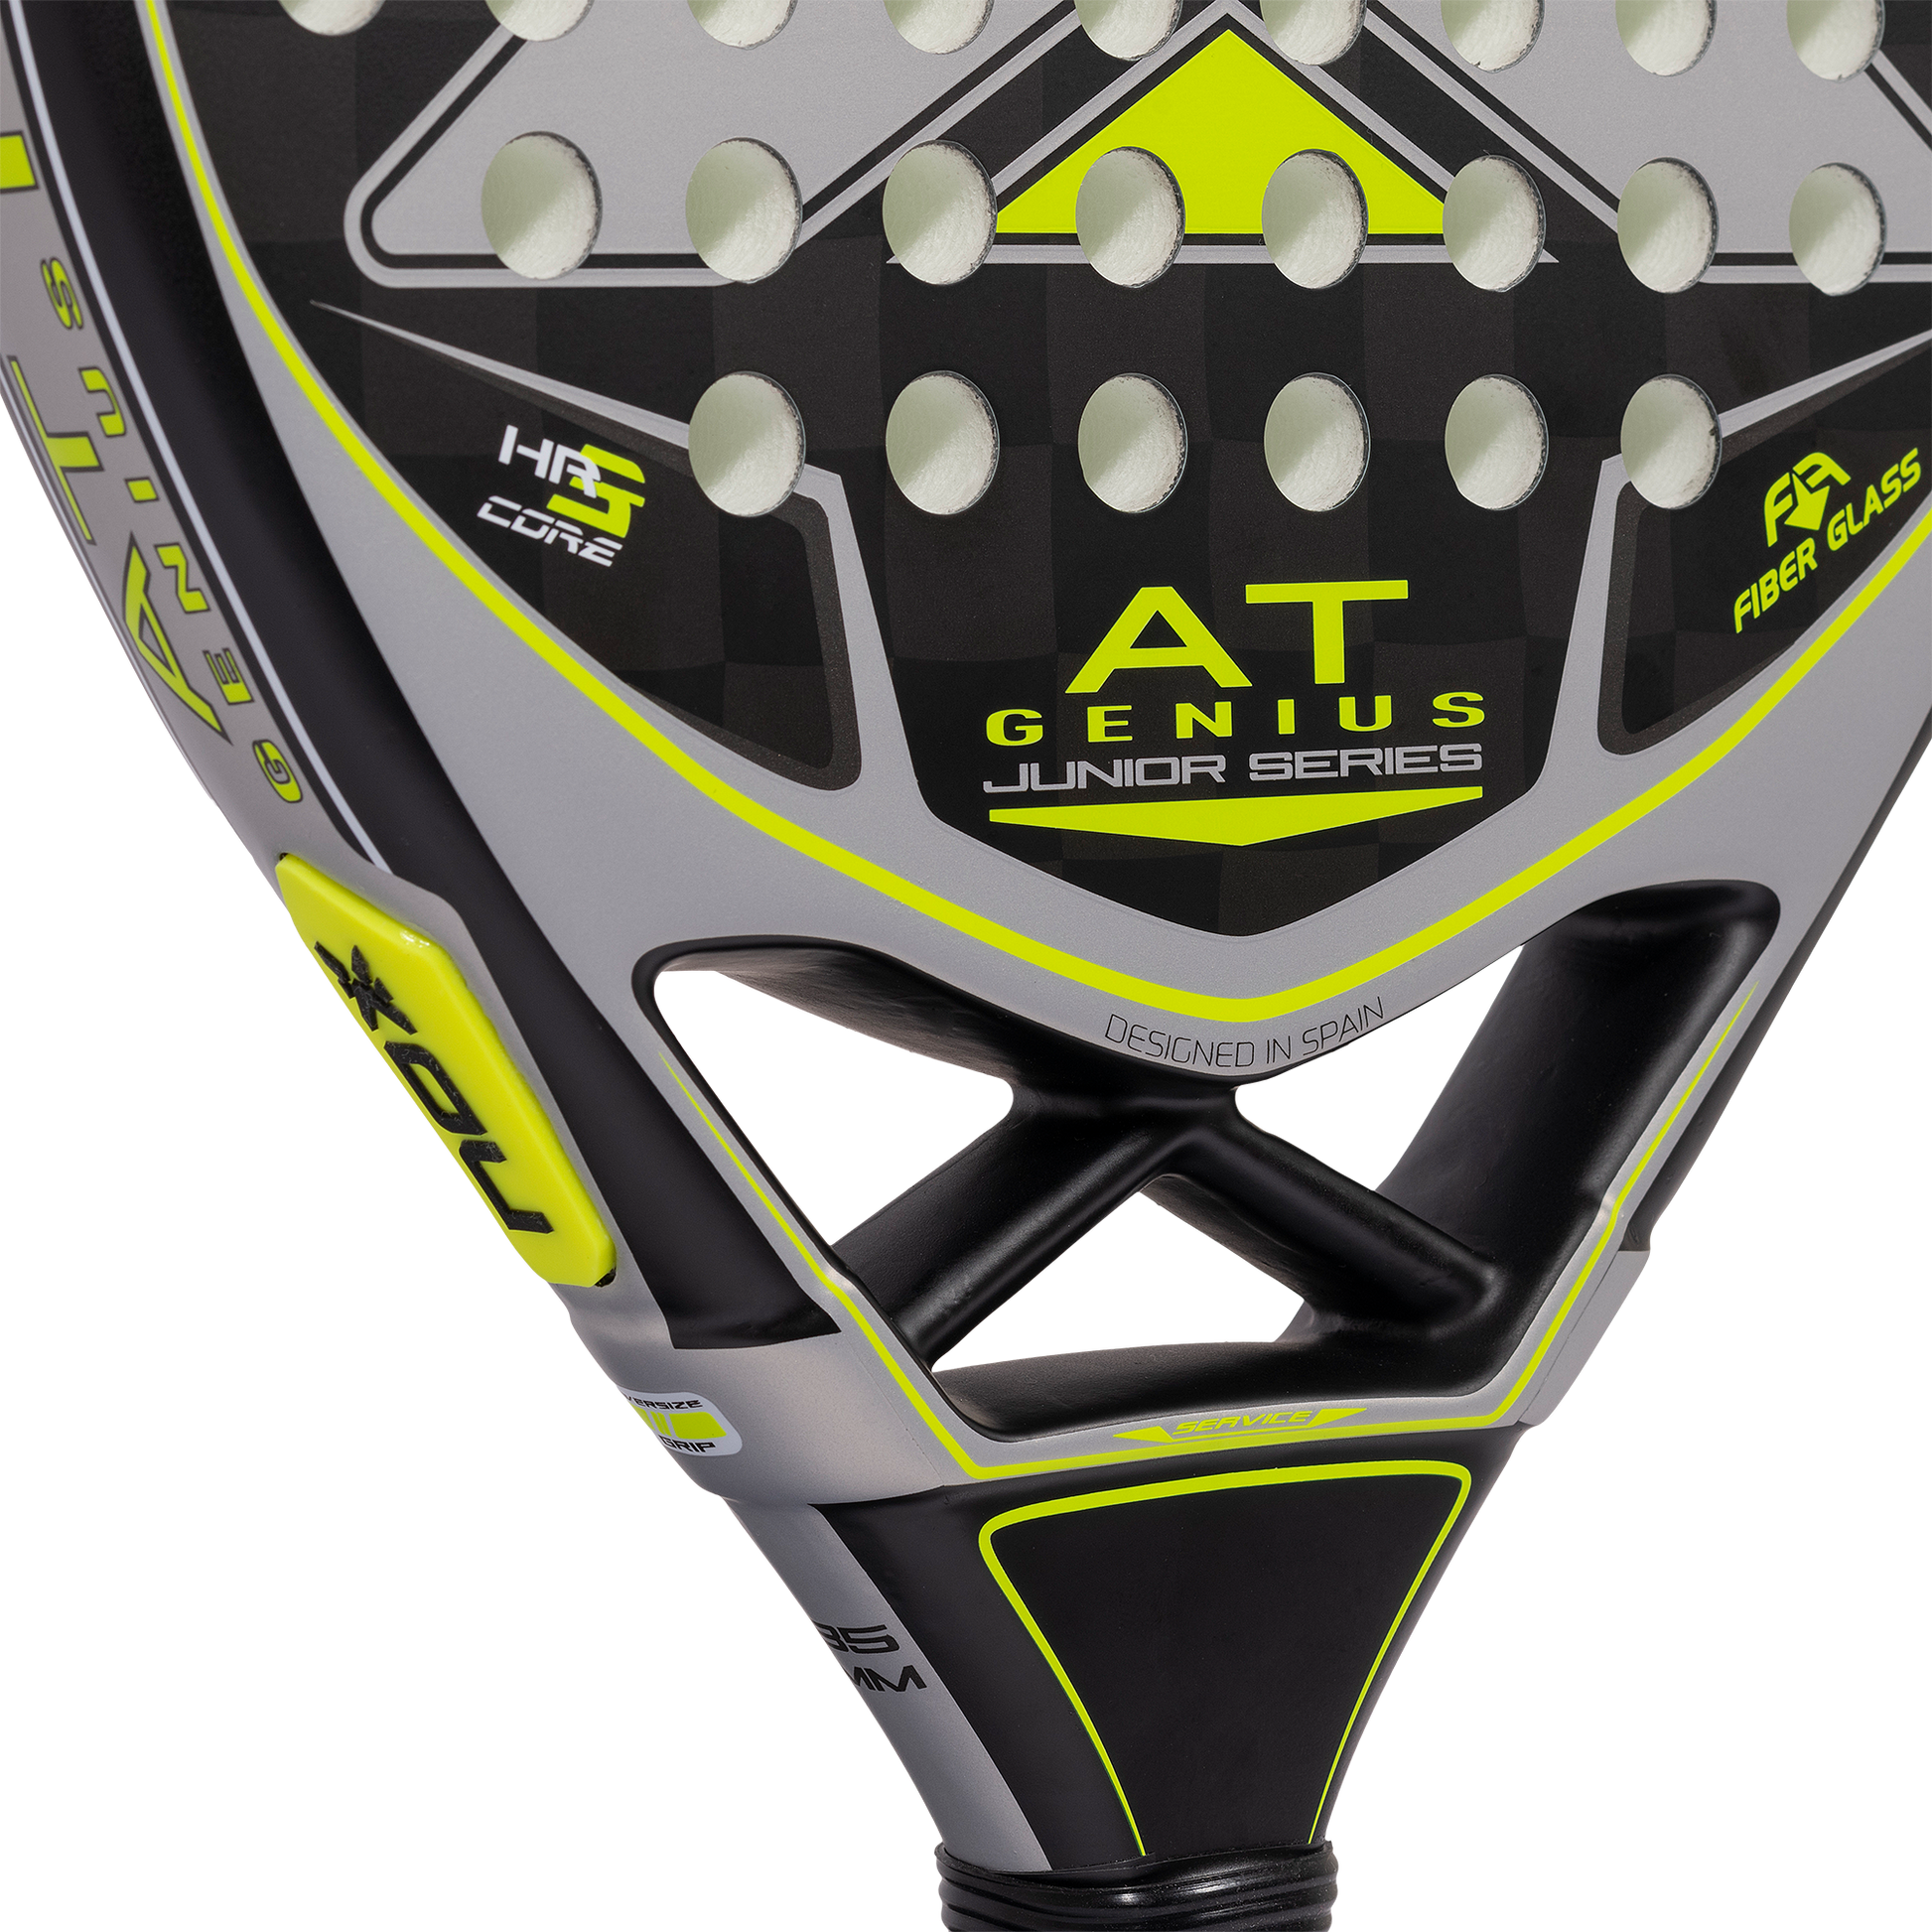 Throat image of the Nox AT10 Genius Junior Padel Racket on sale at thepadelshop.co.nz